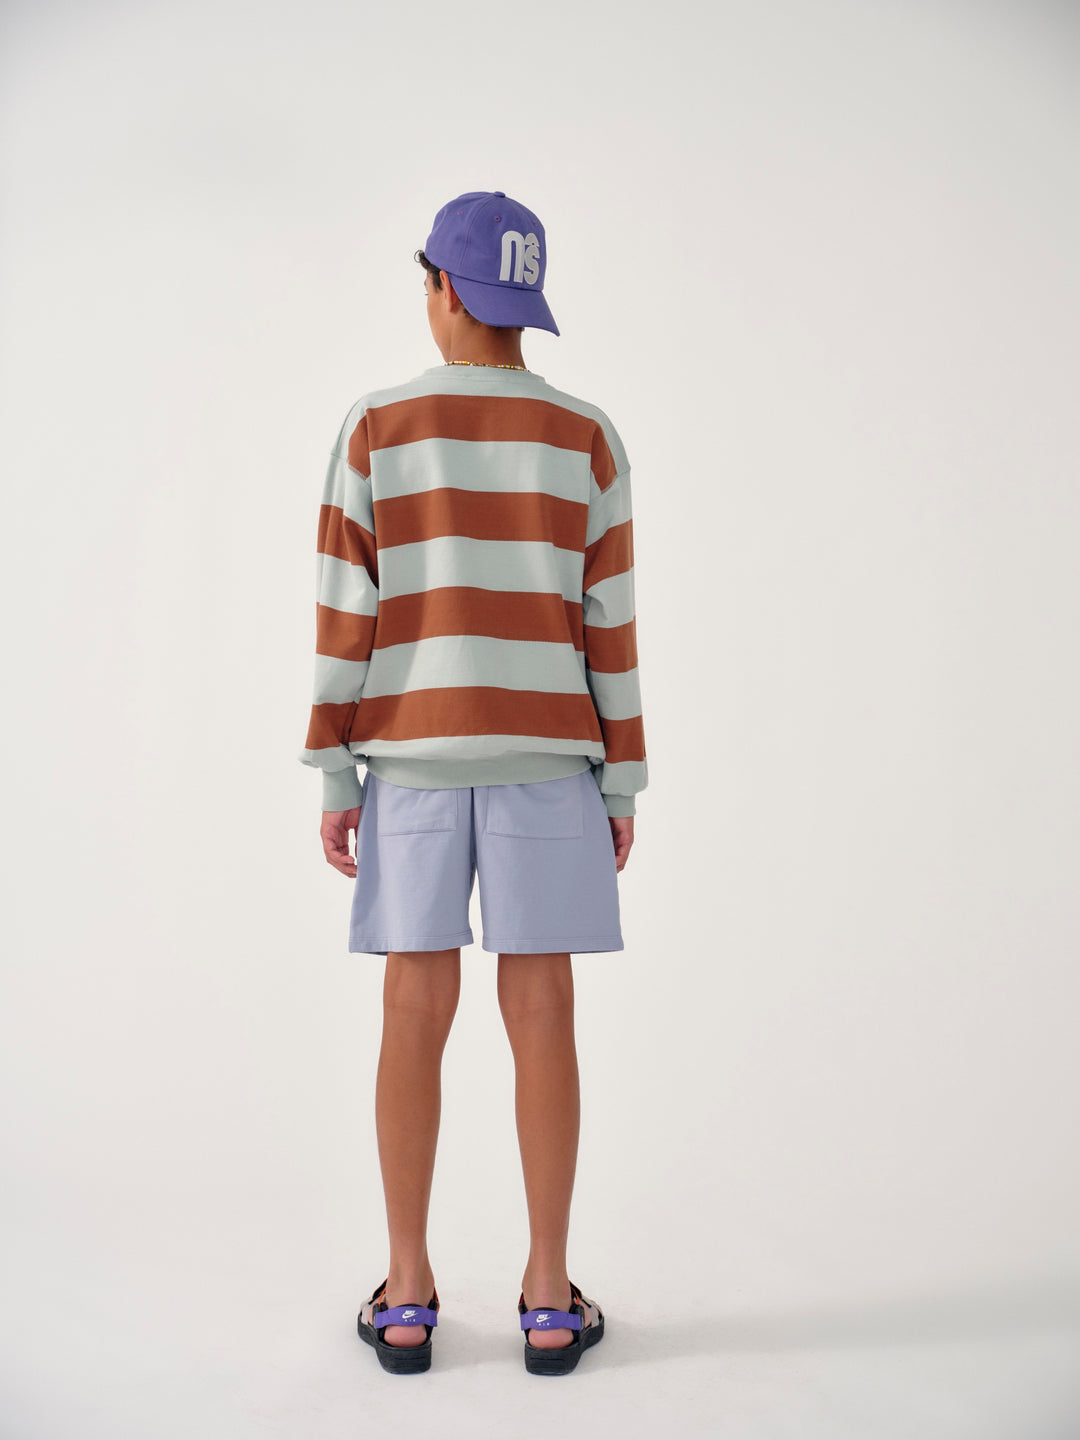 Oversized Sweatshirt - Mist Stripe